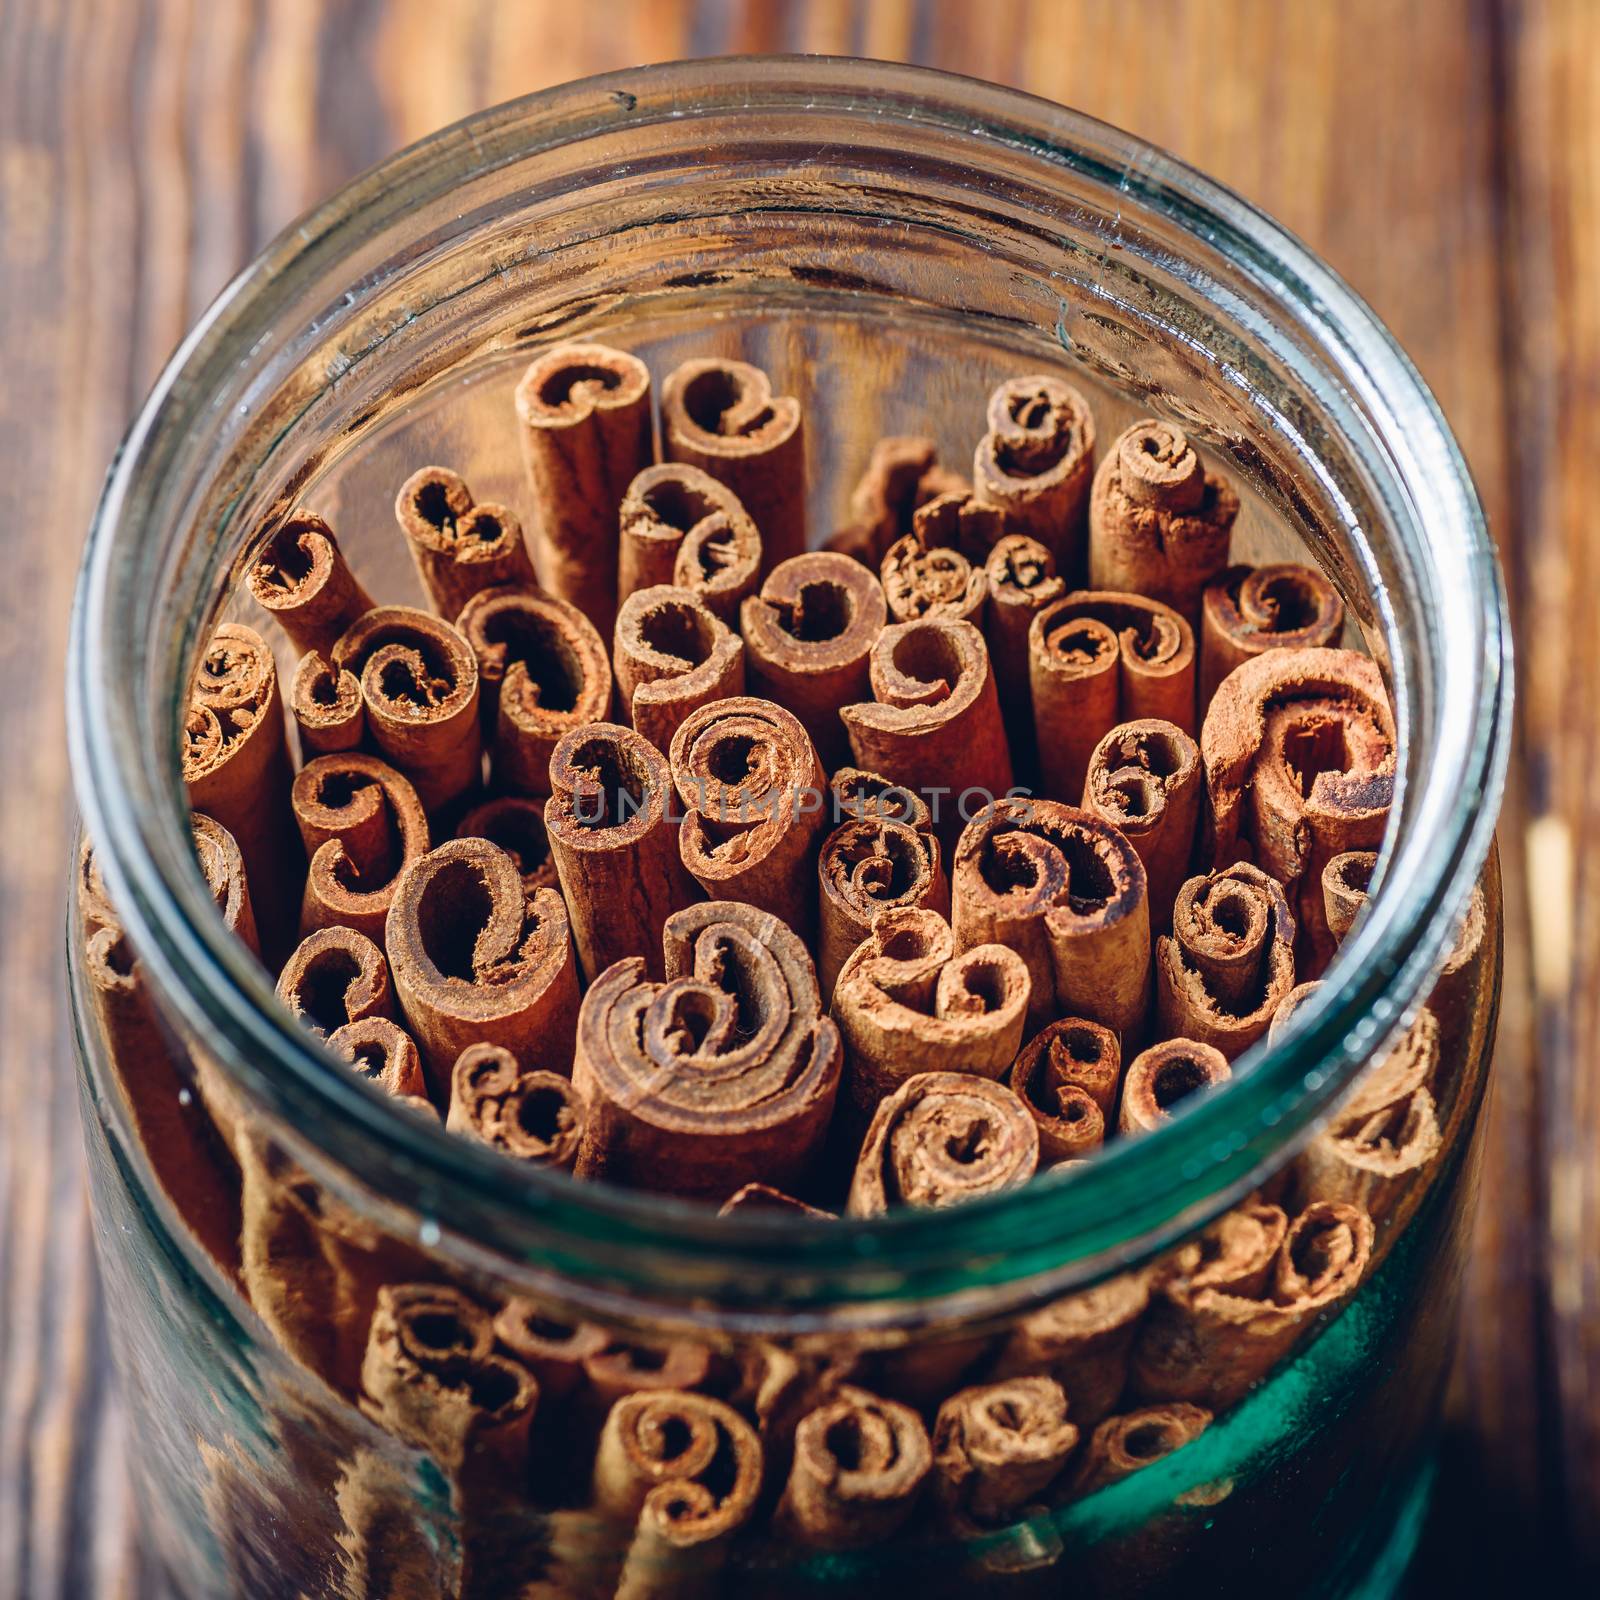 Jar of Cinnamon Sticks. by Seva_blsv